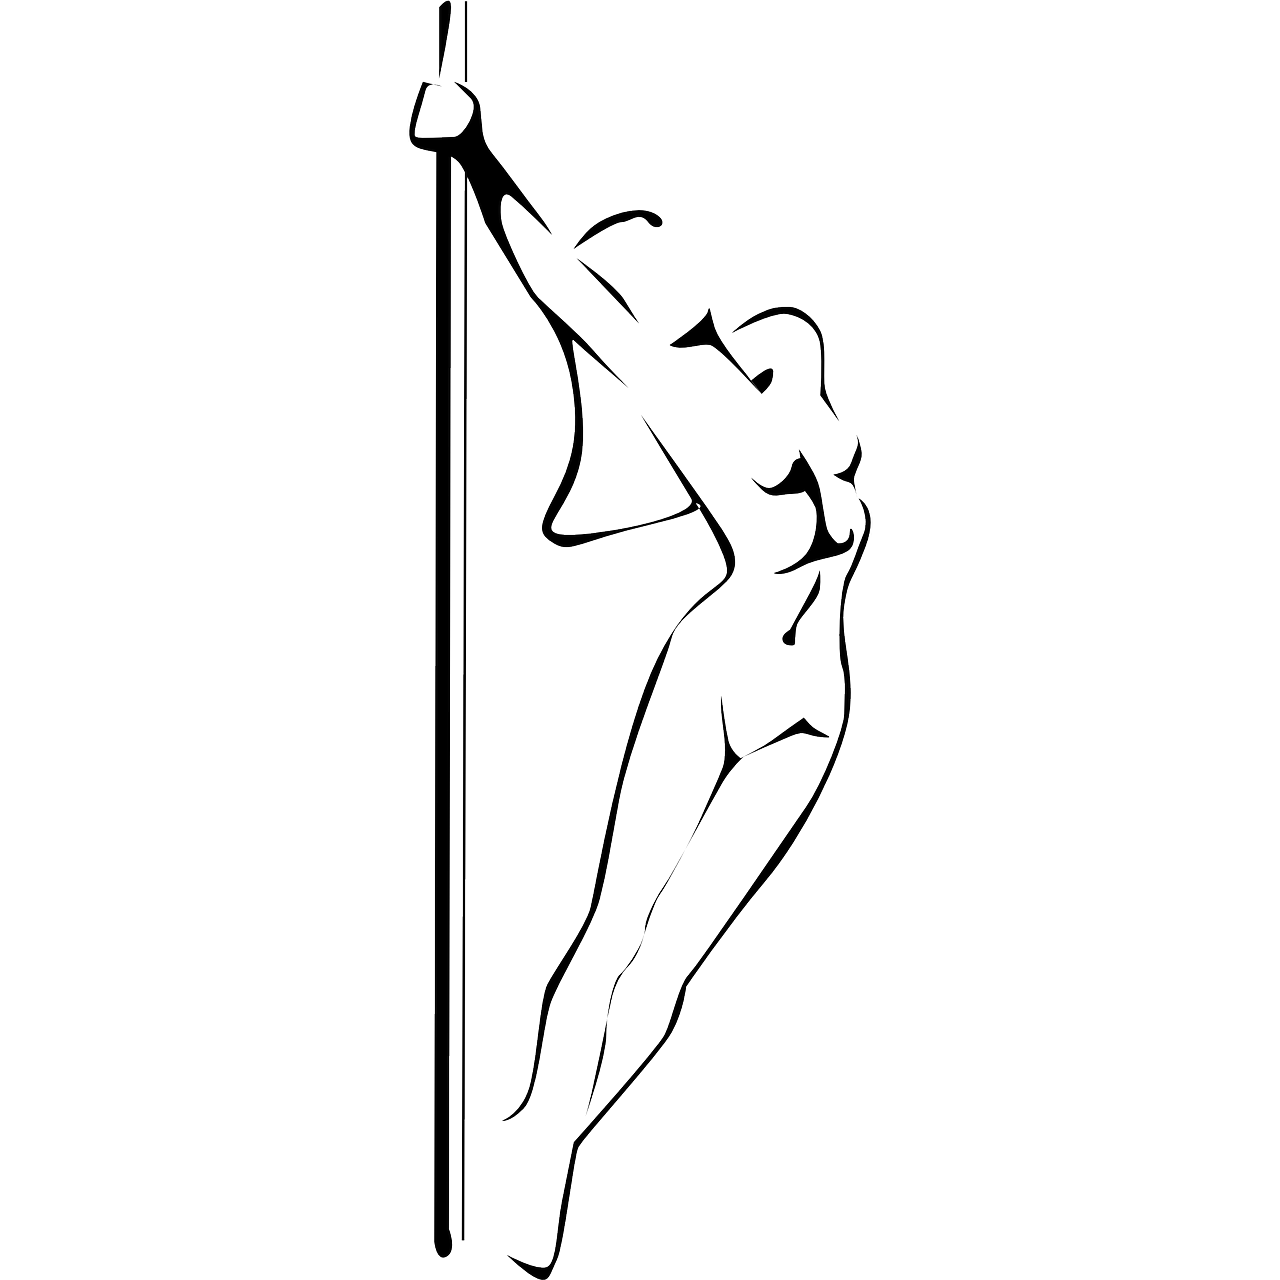 Karin's Pole Dance in Nürnberg